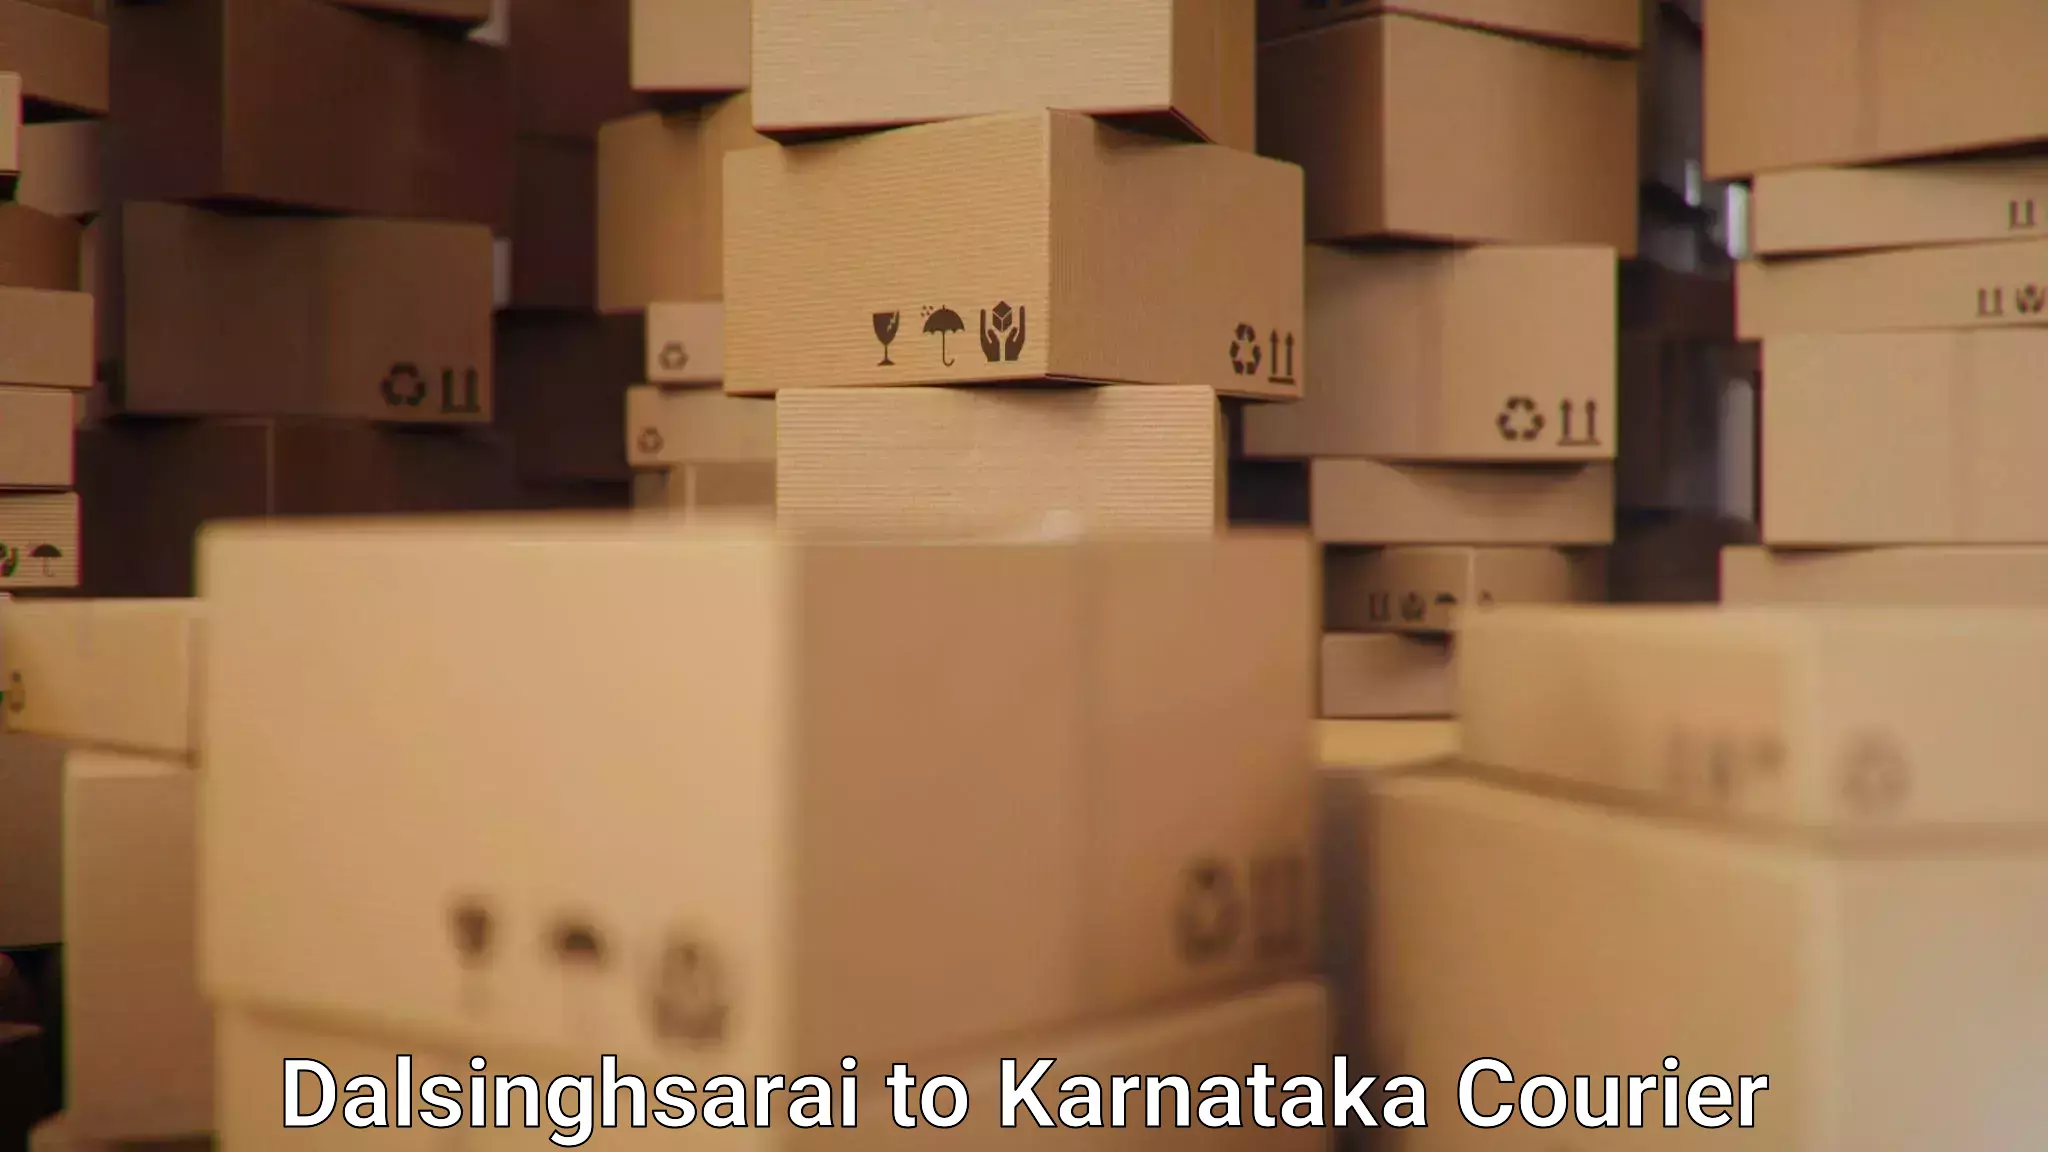 Professional delivery solutions Dalsinghsarai to Karnataka